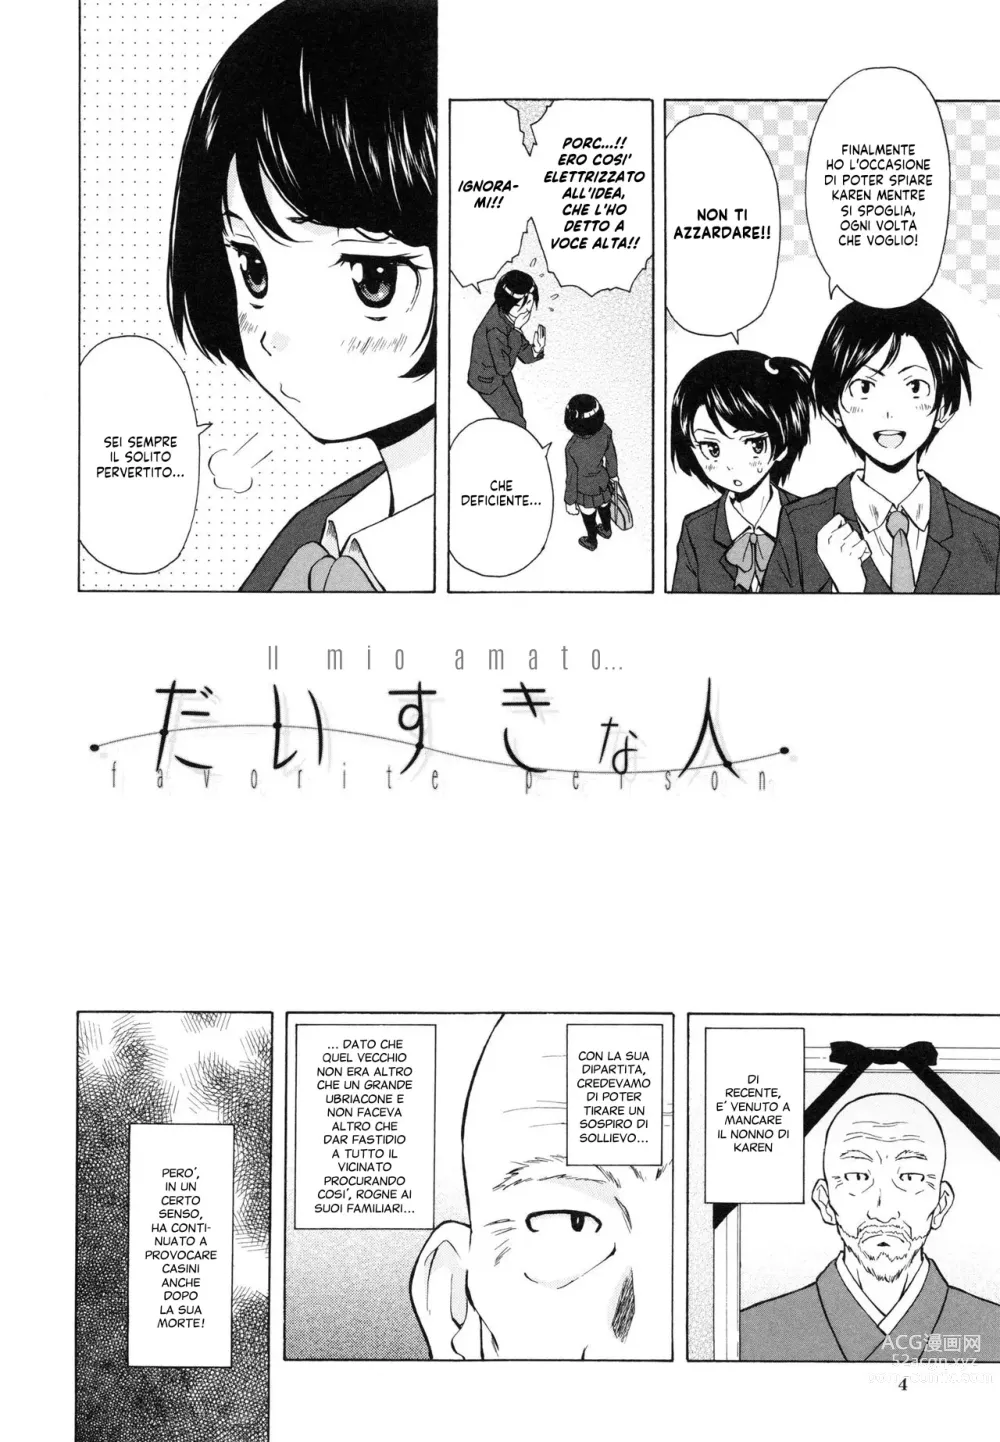 Page 6 of manga Cugine e Cognate...